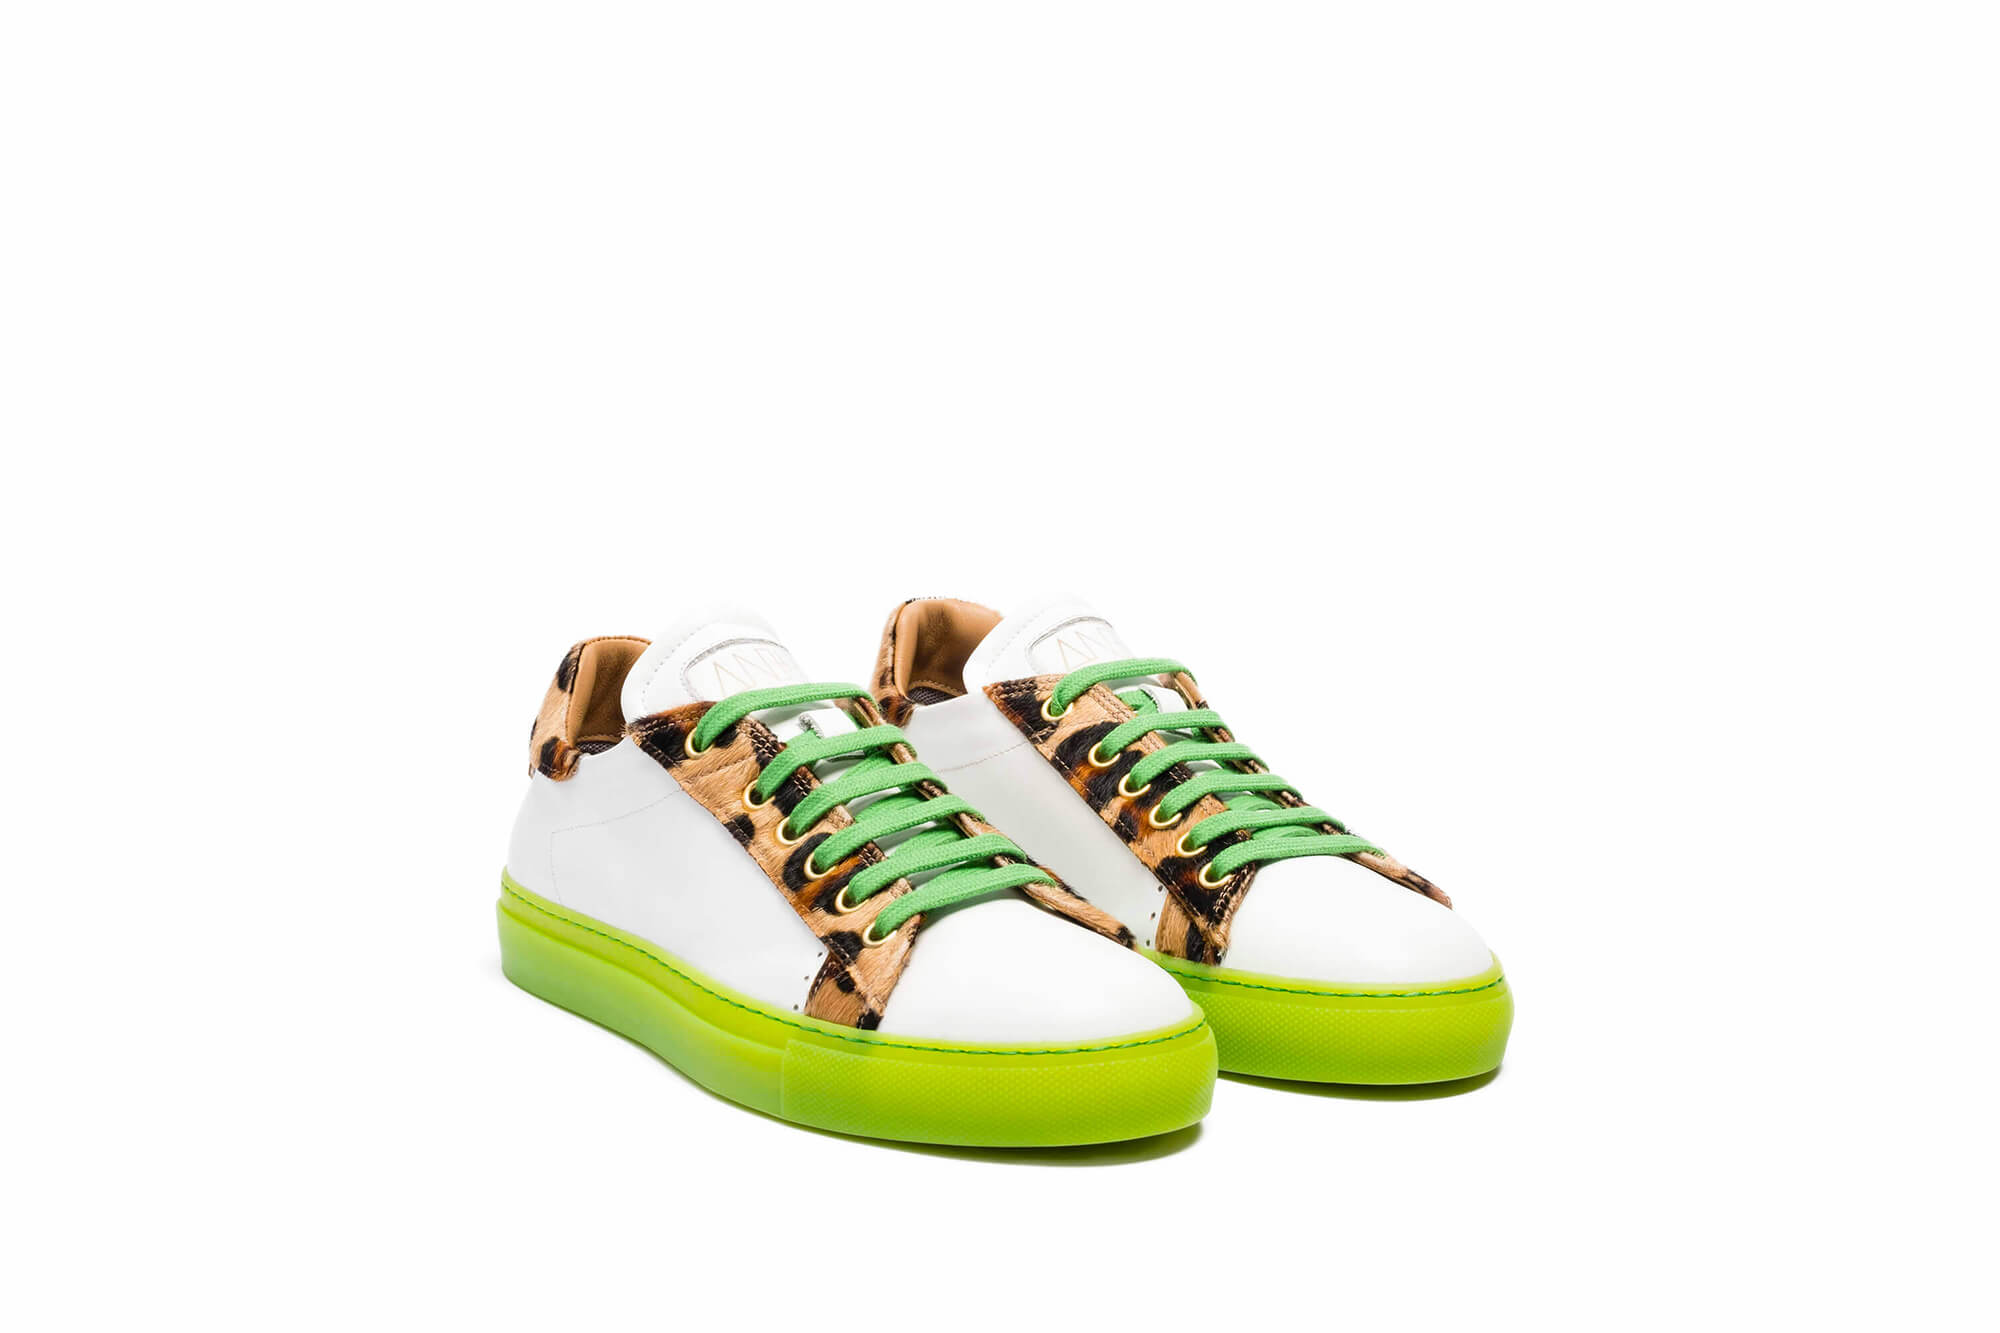 Neli customized made in Italy sneakers by Nele De Groodt